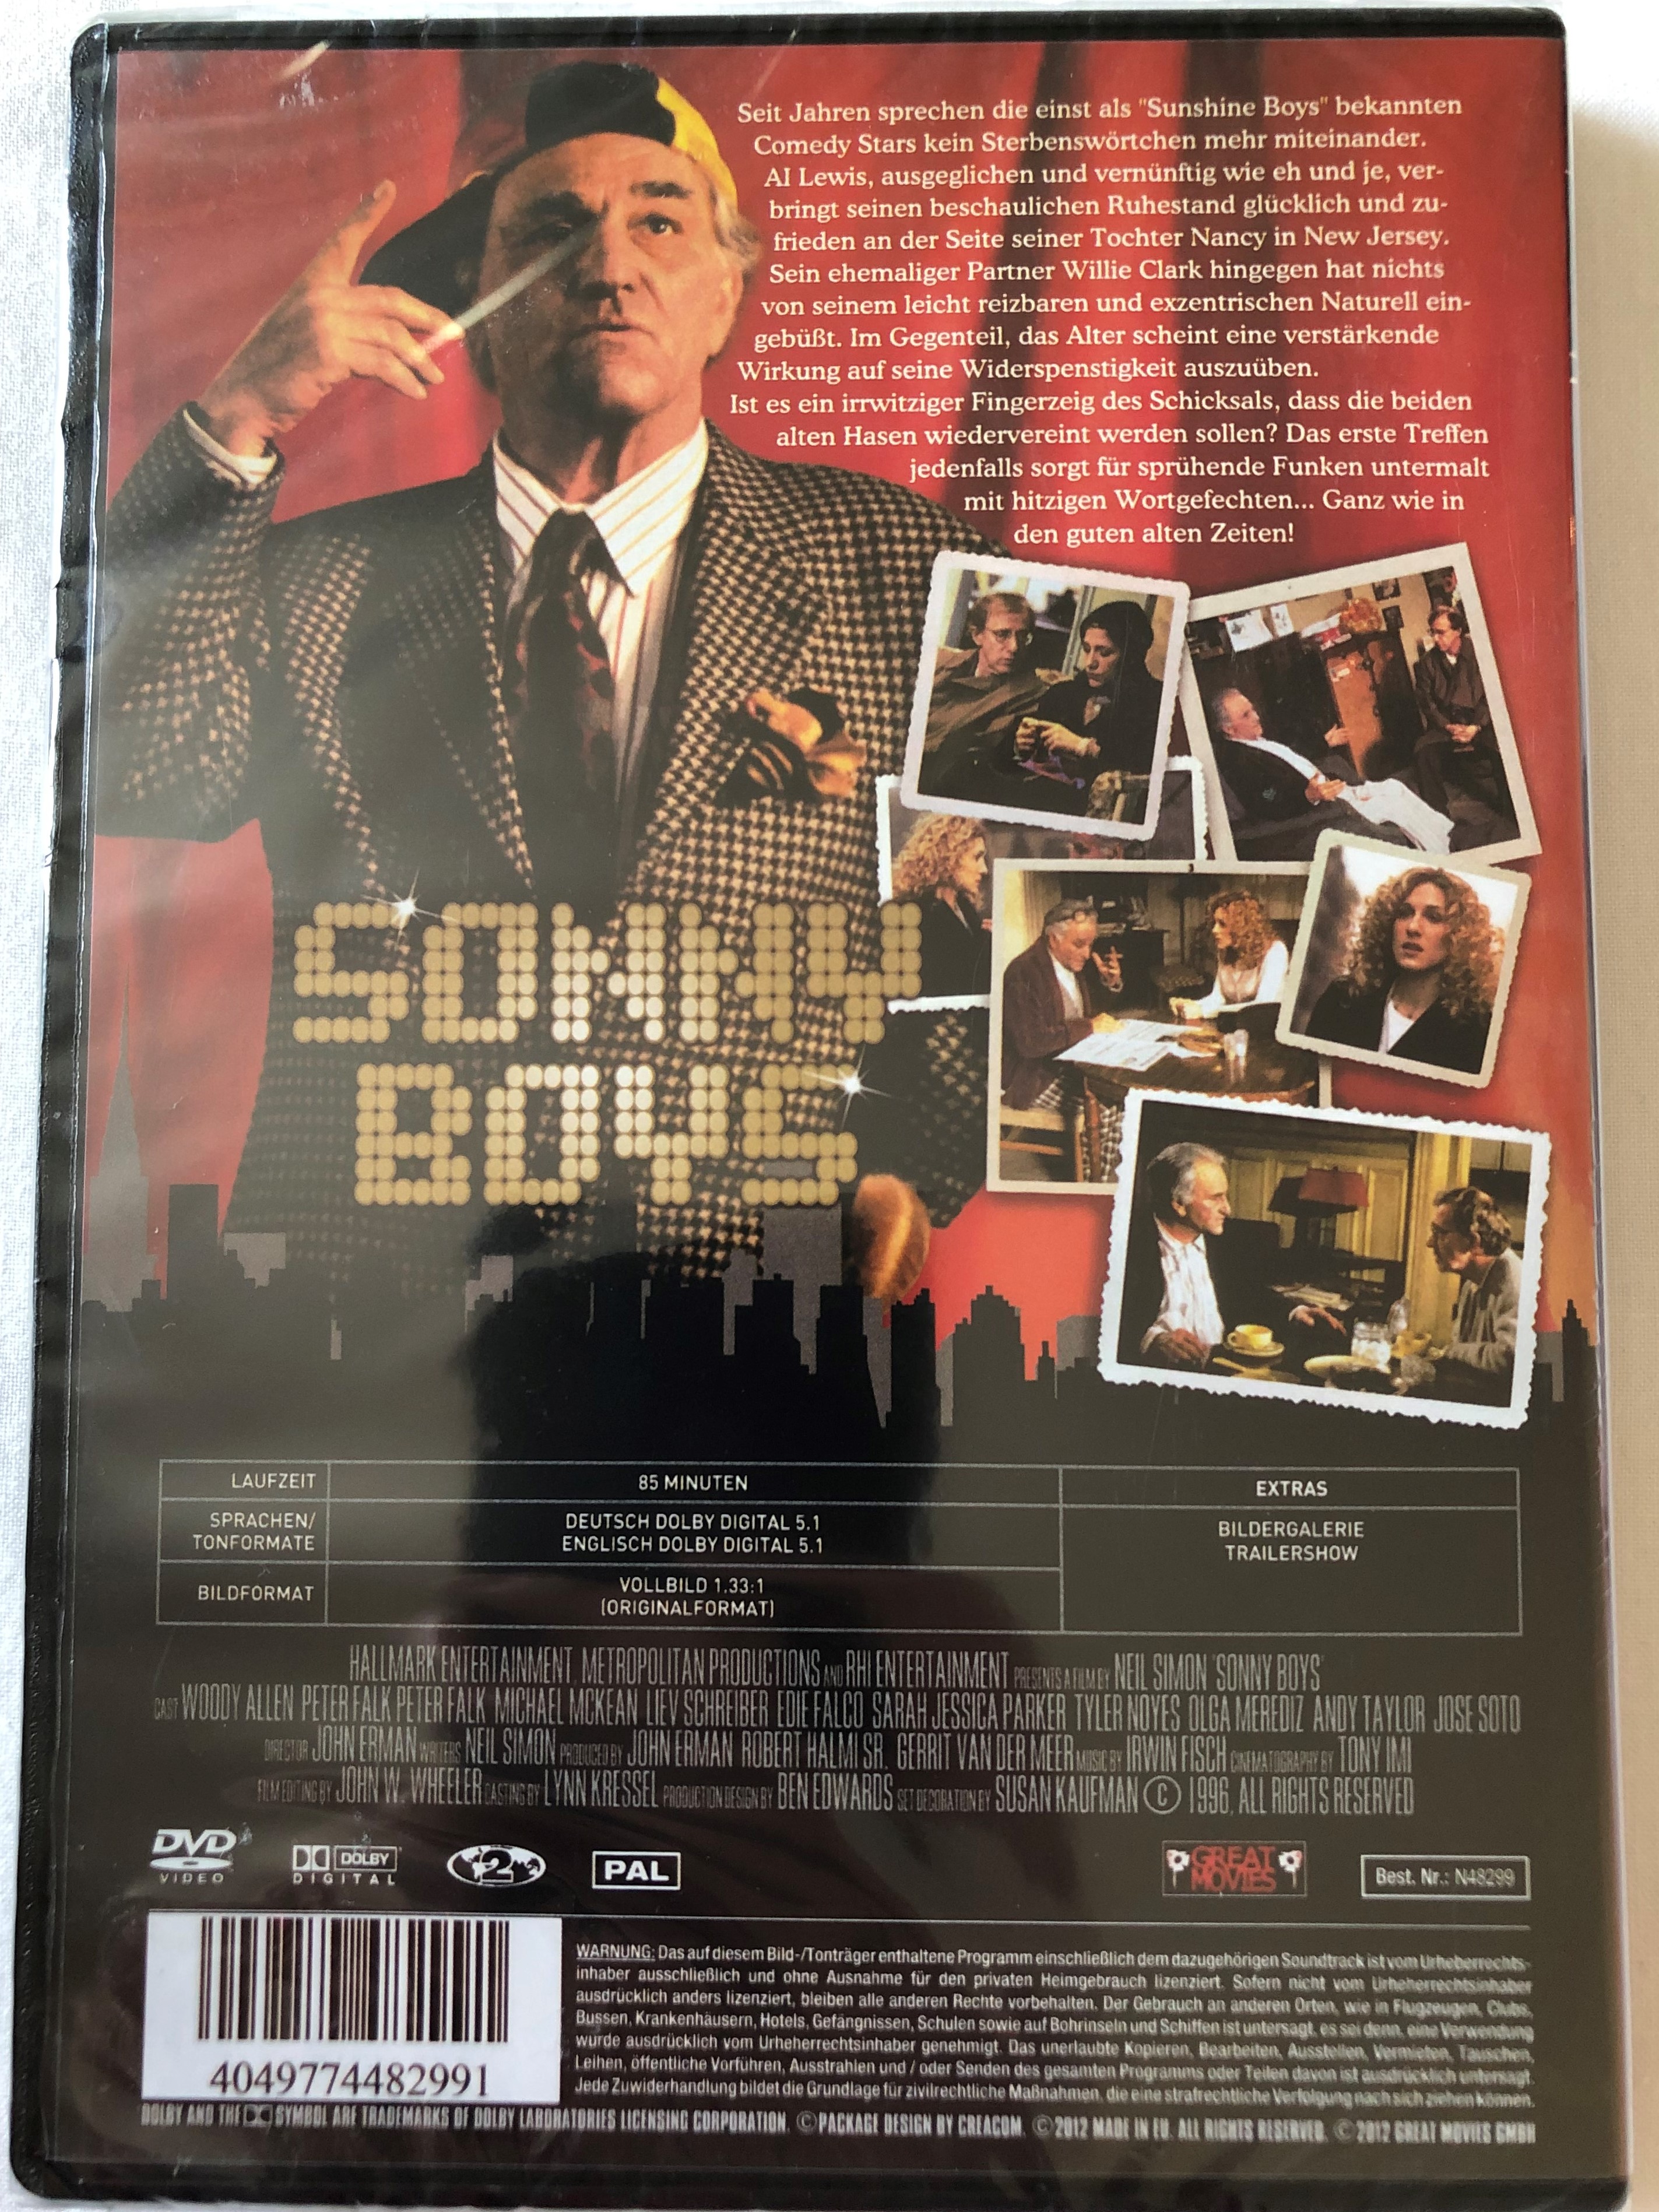 sonny-boys-dvd-1996-the-sunshine-boys-directed-by-john-erman-starring-woody-allen-sarah-jessica-parker-peter-falk-zwei-wie-pech-und-schwefel-2-.jpg